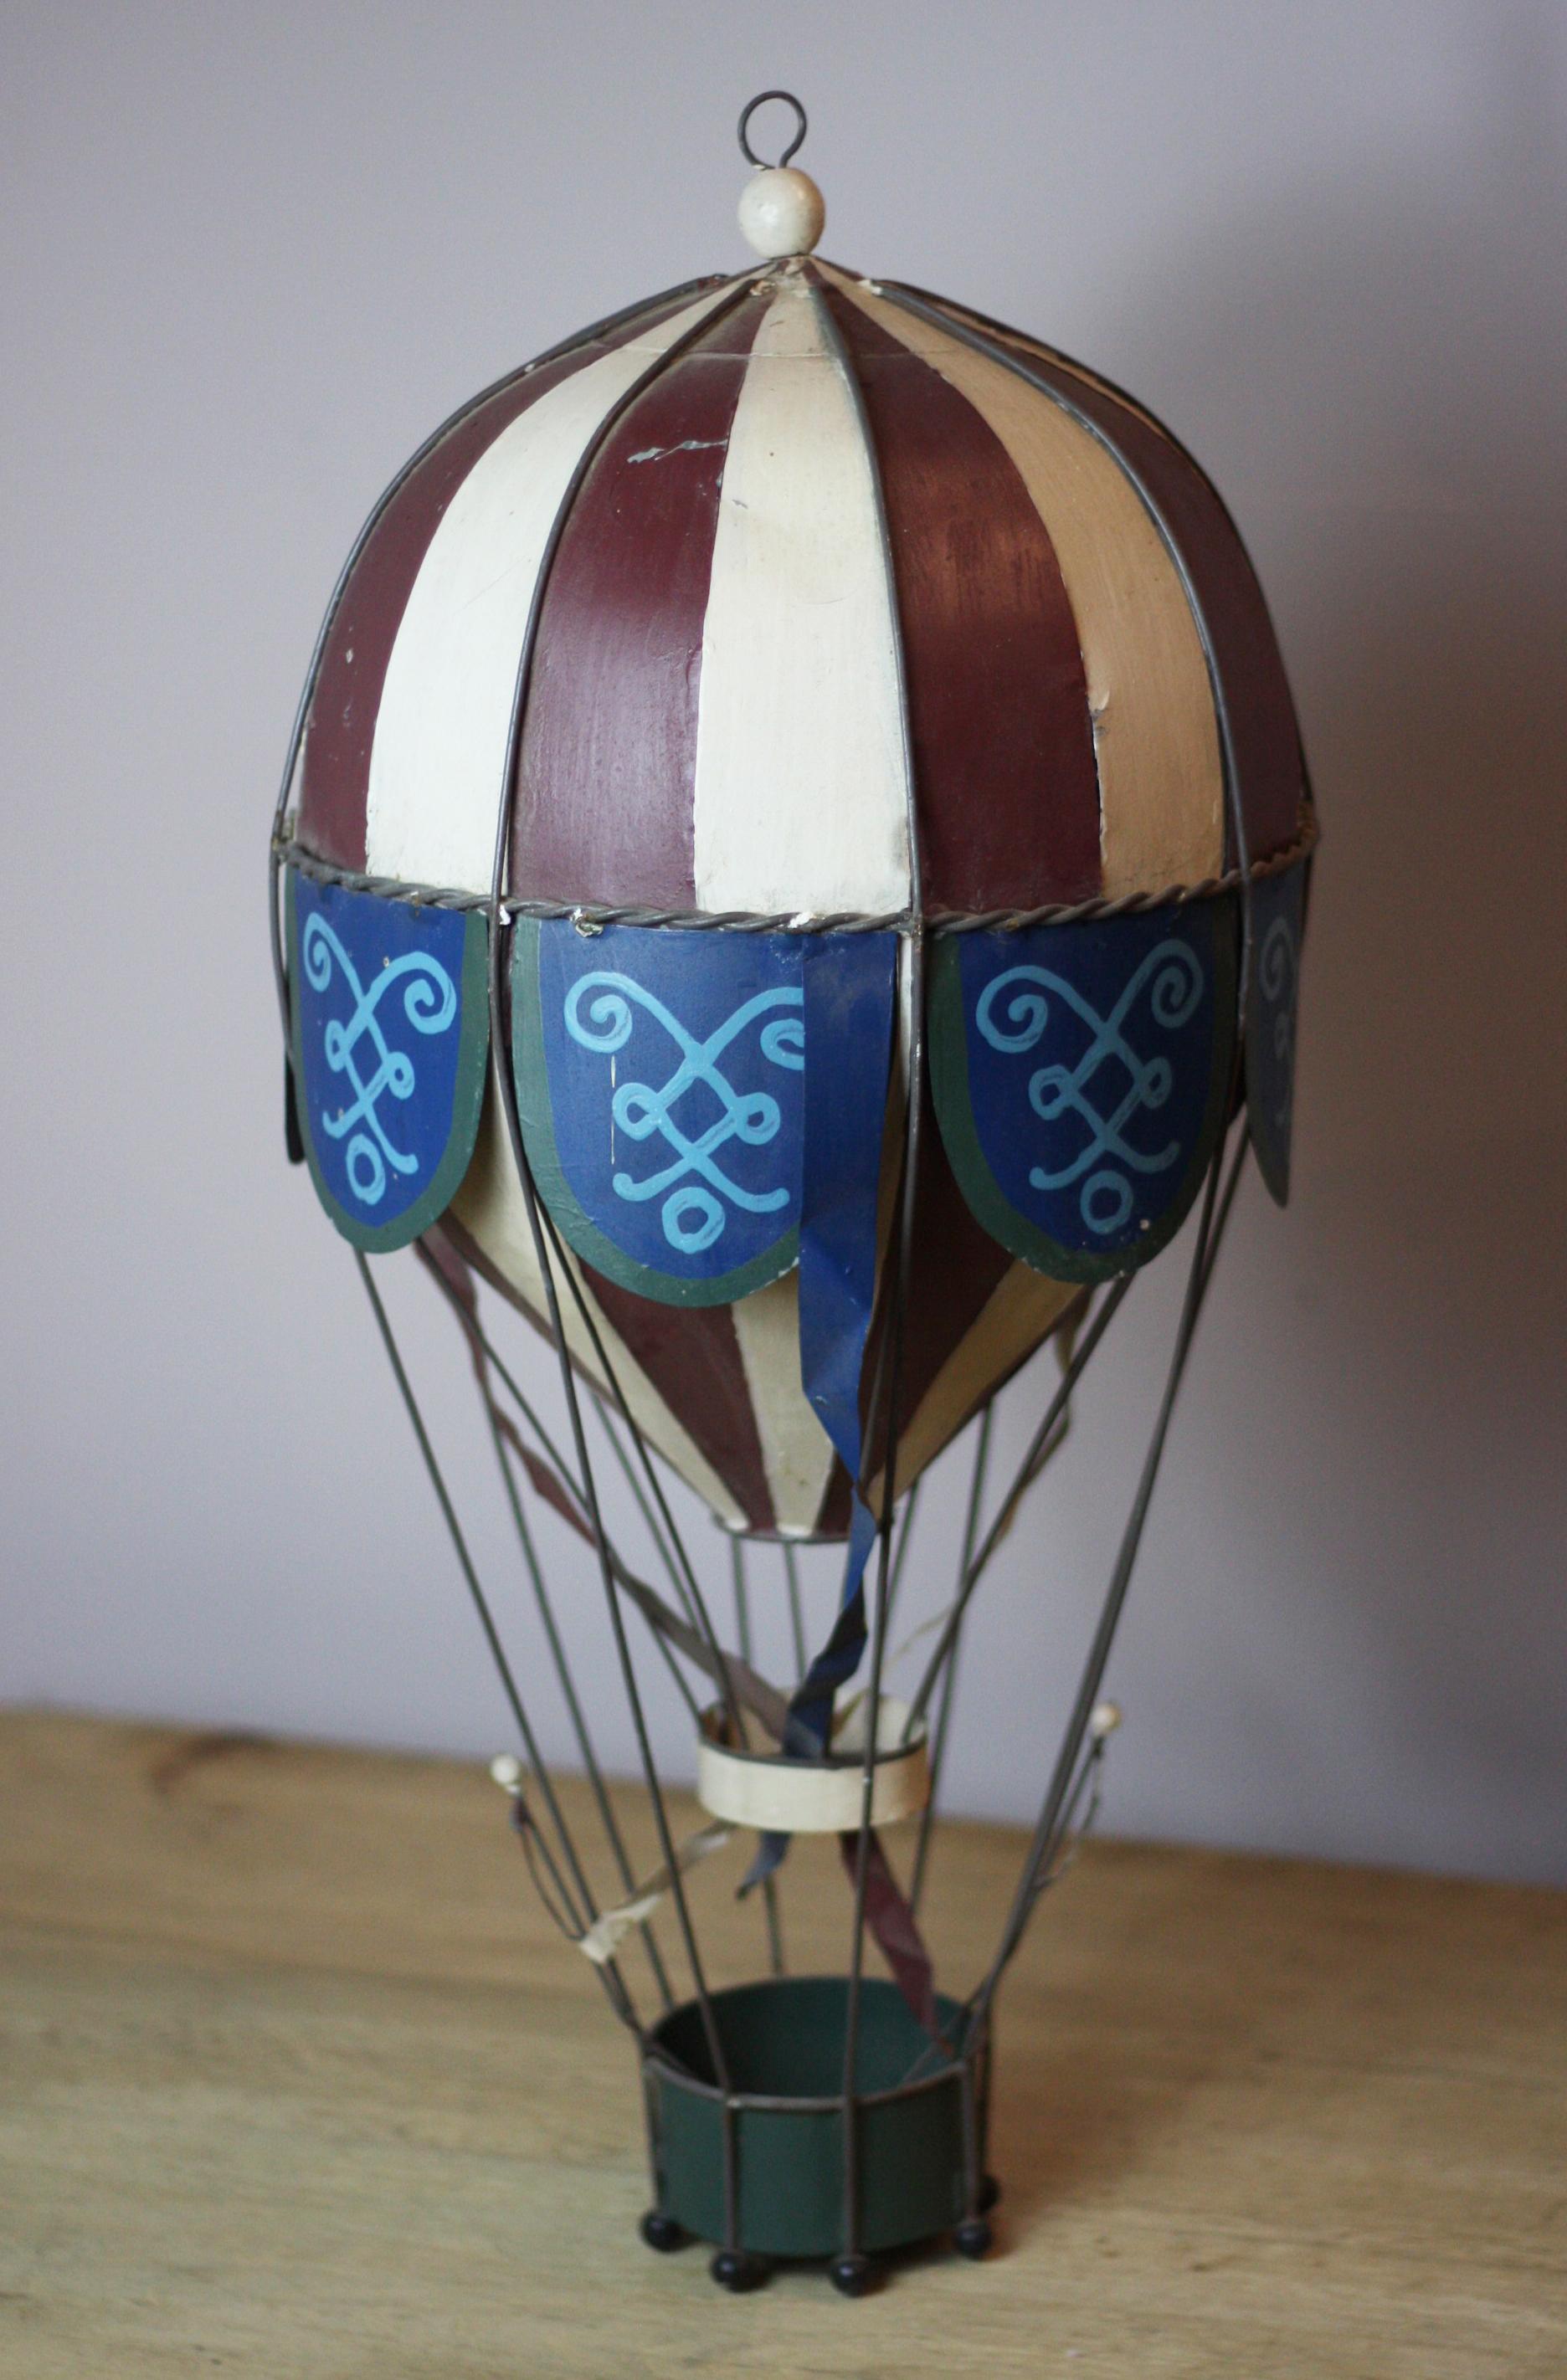 Fun and decorative brightly painted tin hot air balloon model, circa 1910.